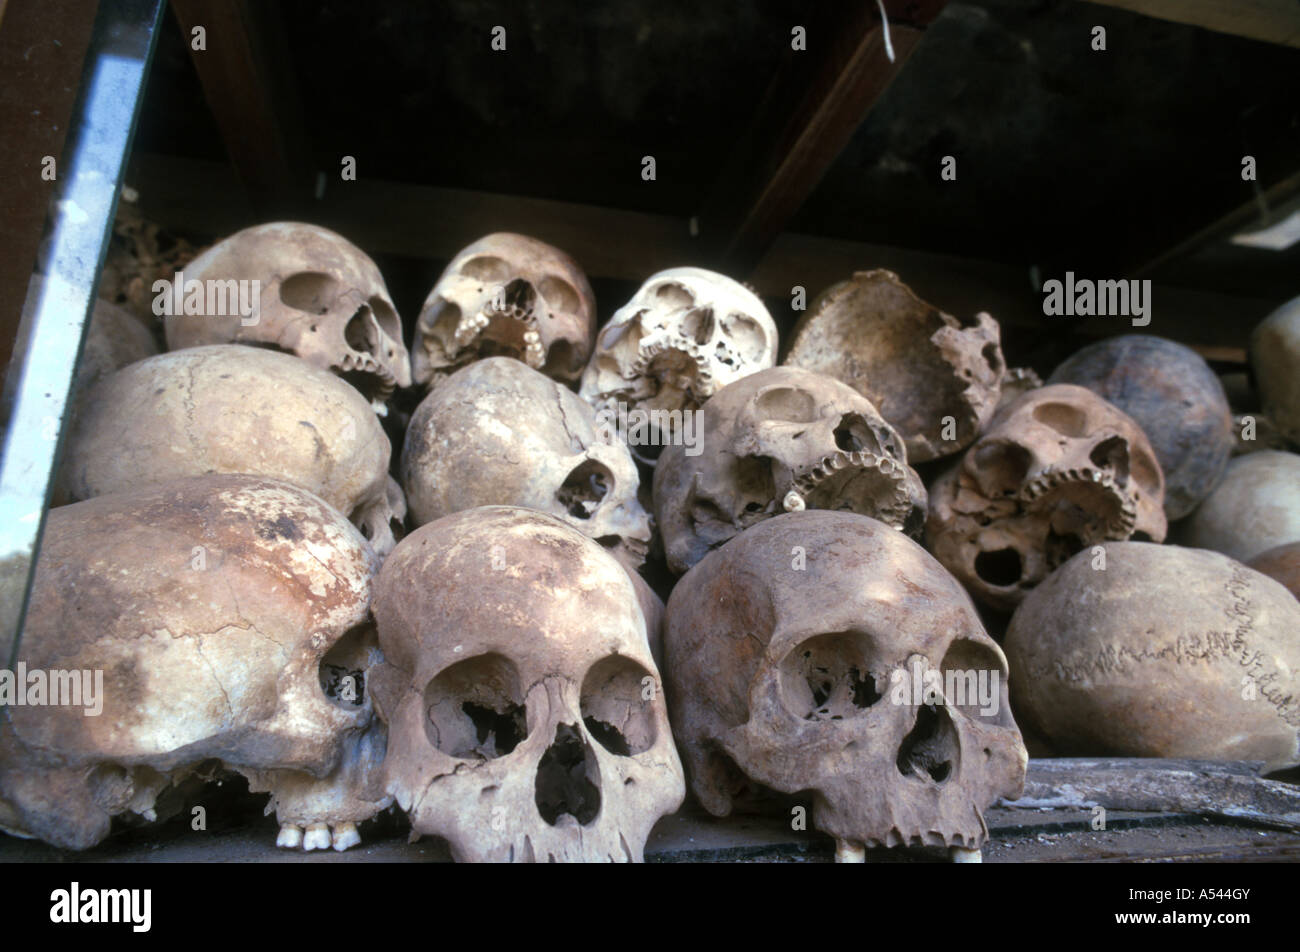 Painet ha2627 5480 cambodia war skulls skull killing fields national monument pnom penh country developing nation less Stock Photo